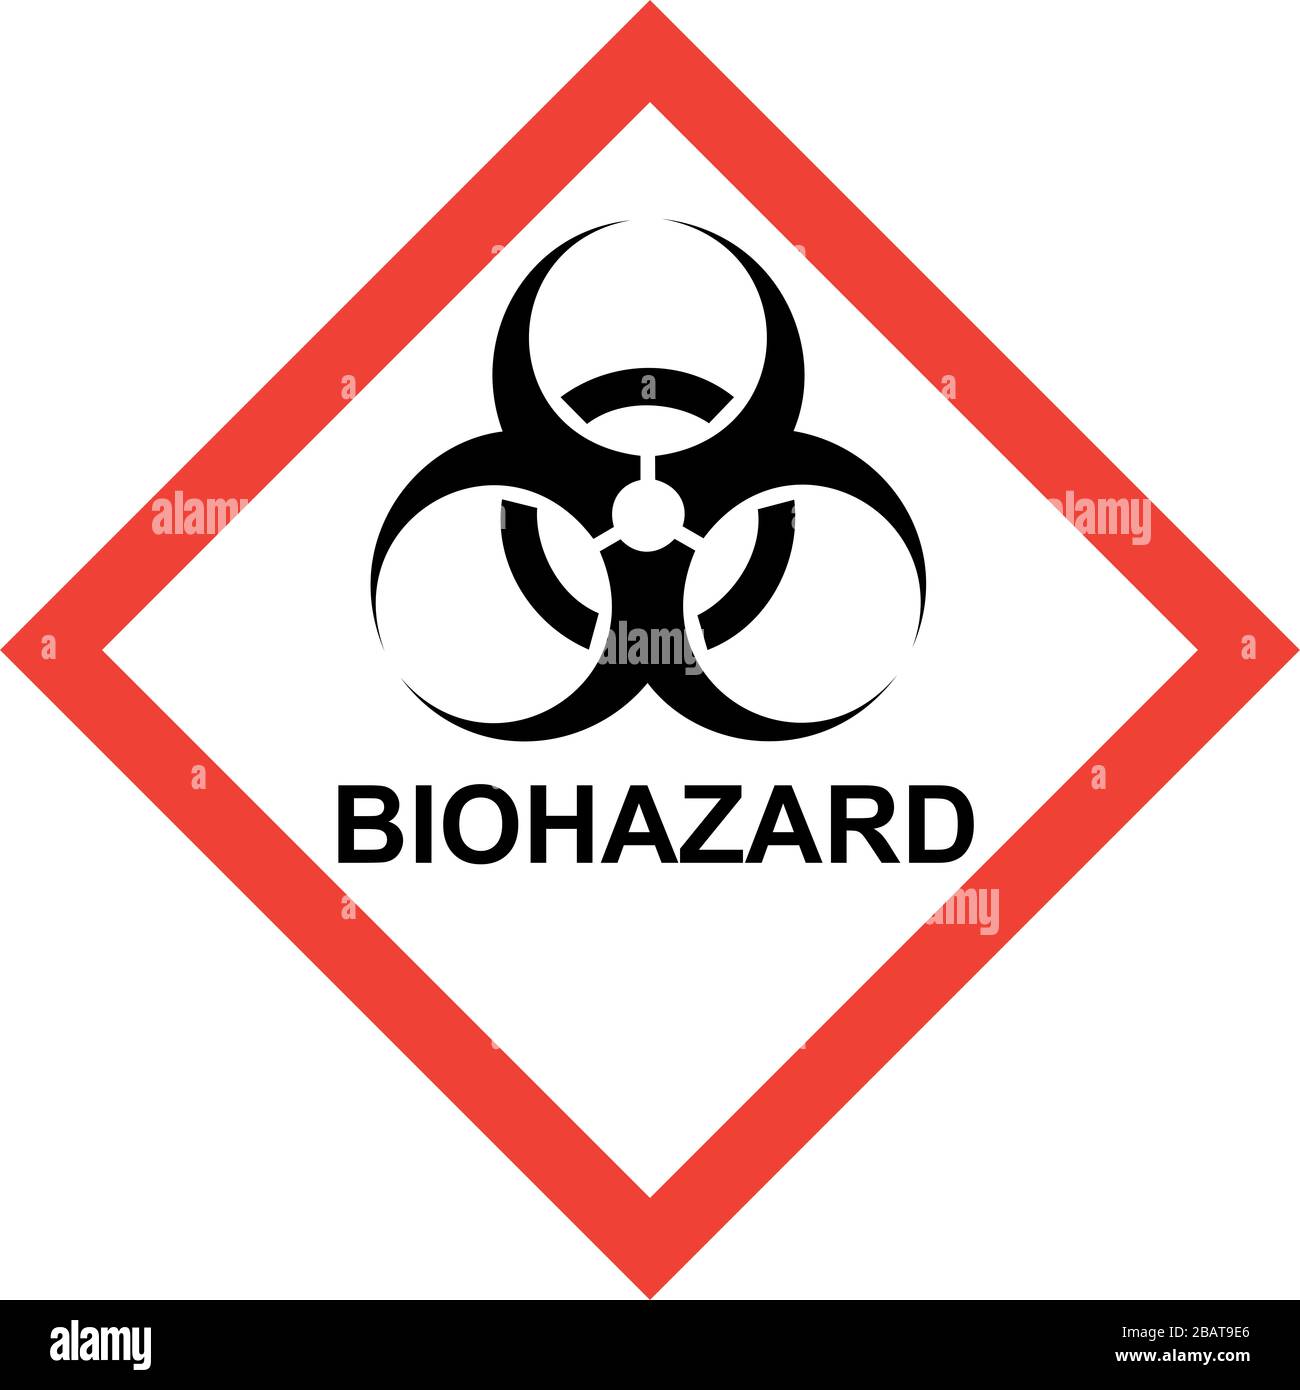 Red hazard sign with biohazard symbol and BIOHAZARD text Stock Photo